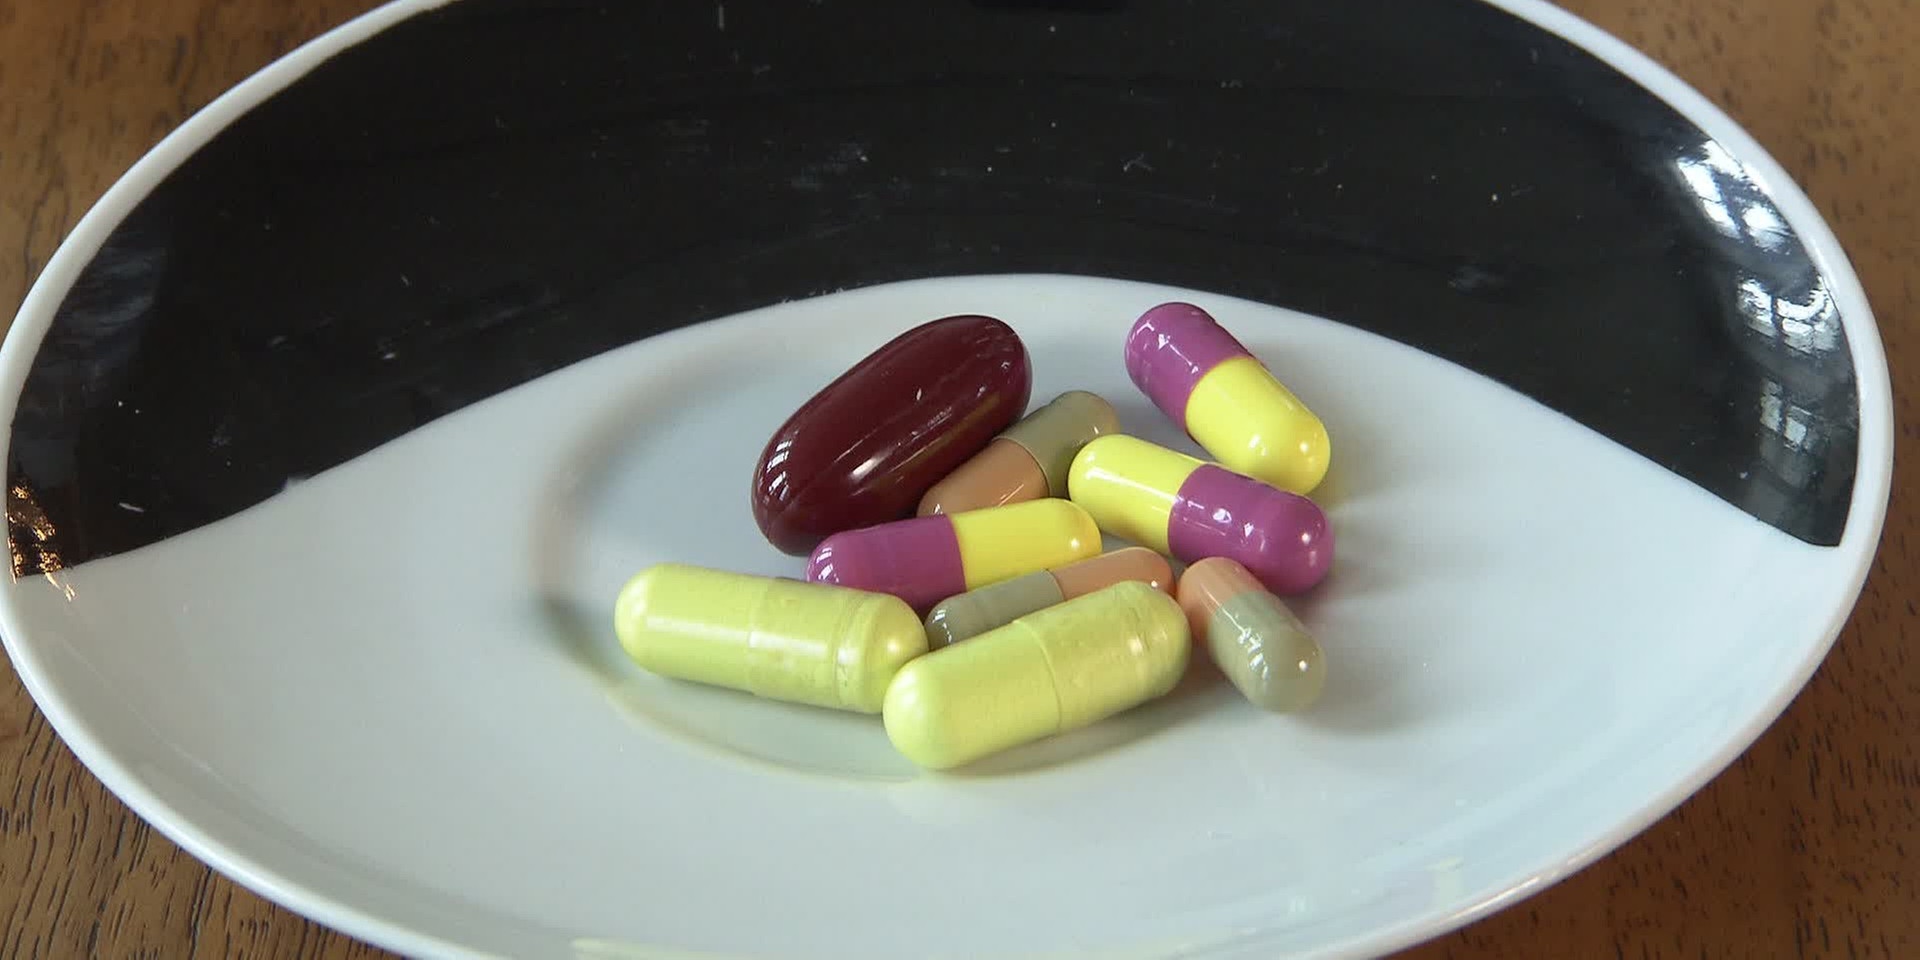 "bewusst gesund" am 3. Juni 2023: Rasche Hilfe - wie Tabletten am besten wirken